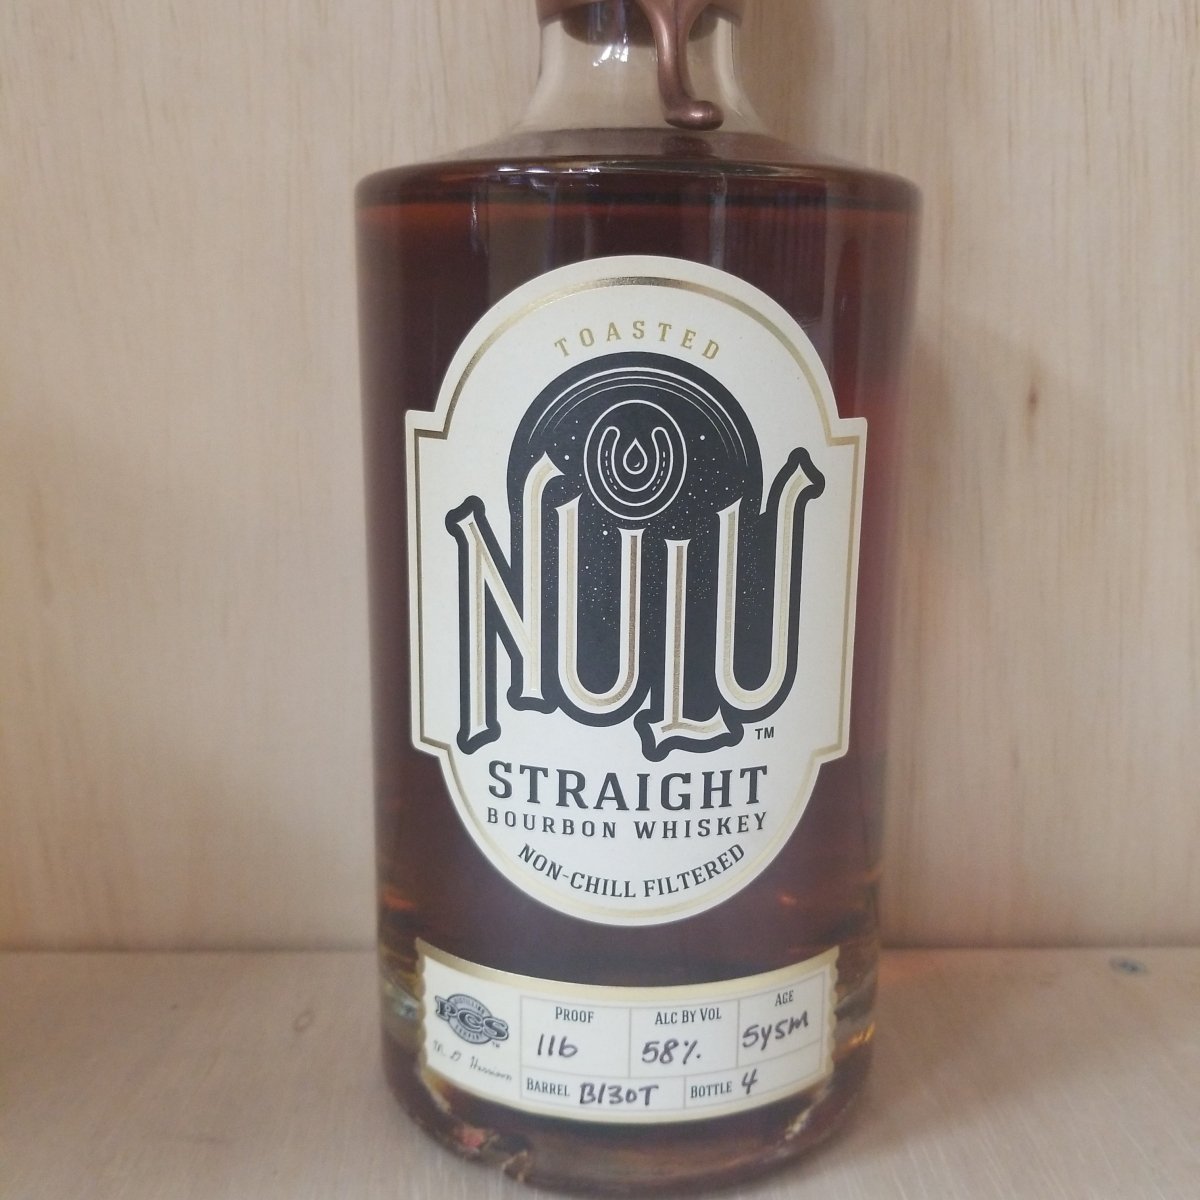 Nulo Single Barrel Toasted Straight Bourbon 750ml (Barrel B130T, proof 116) - Sip & Say